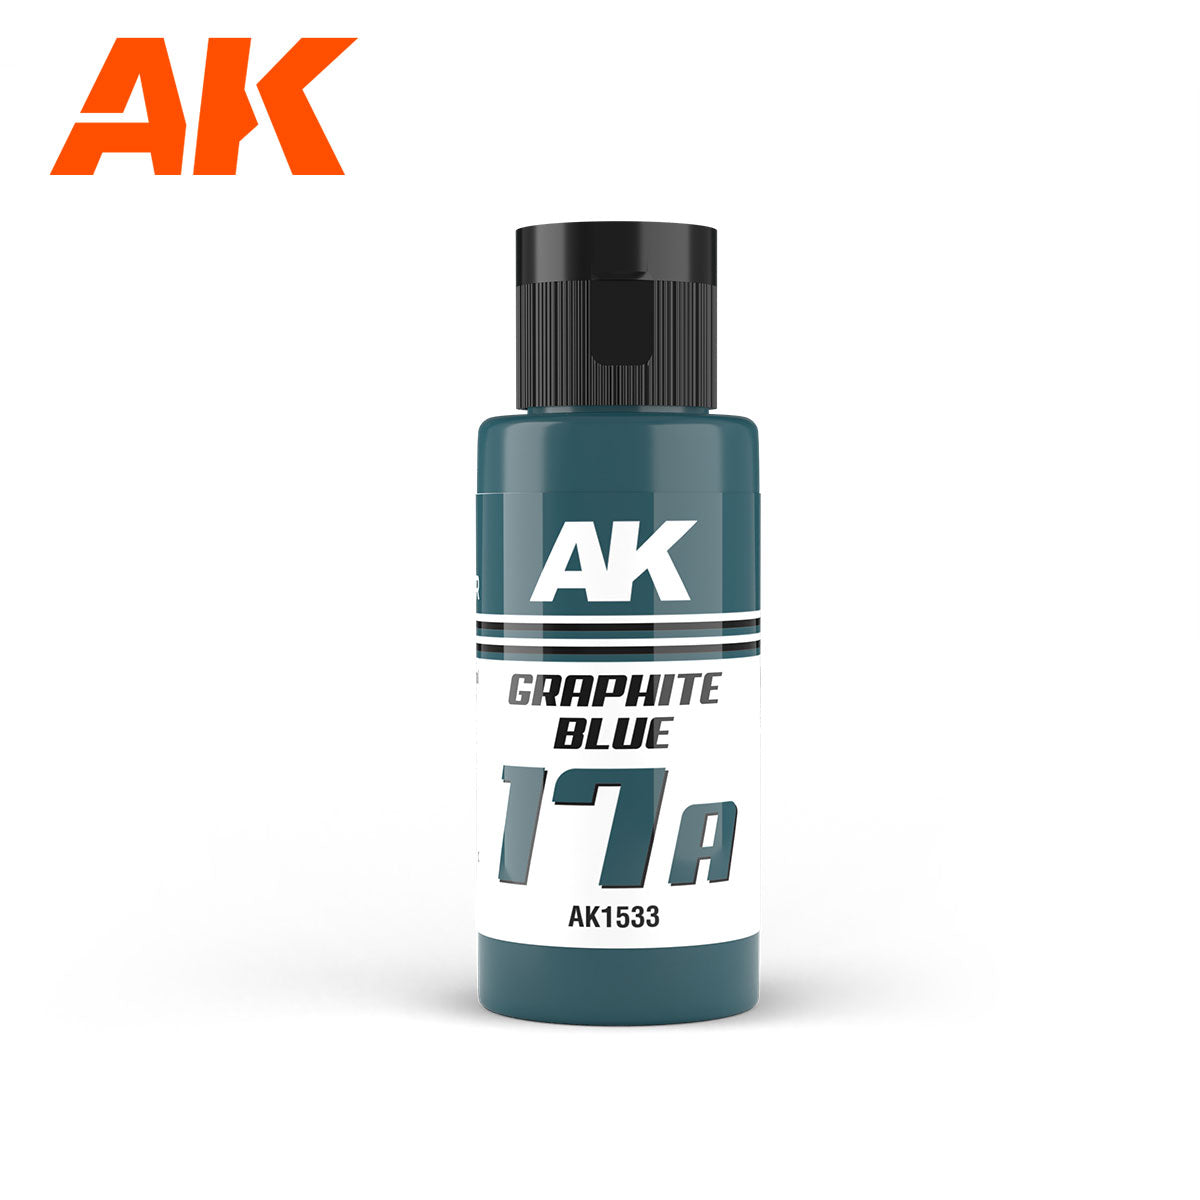 AK Interactive Dual Exo 17A Graphite Blue 60ml